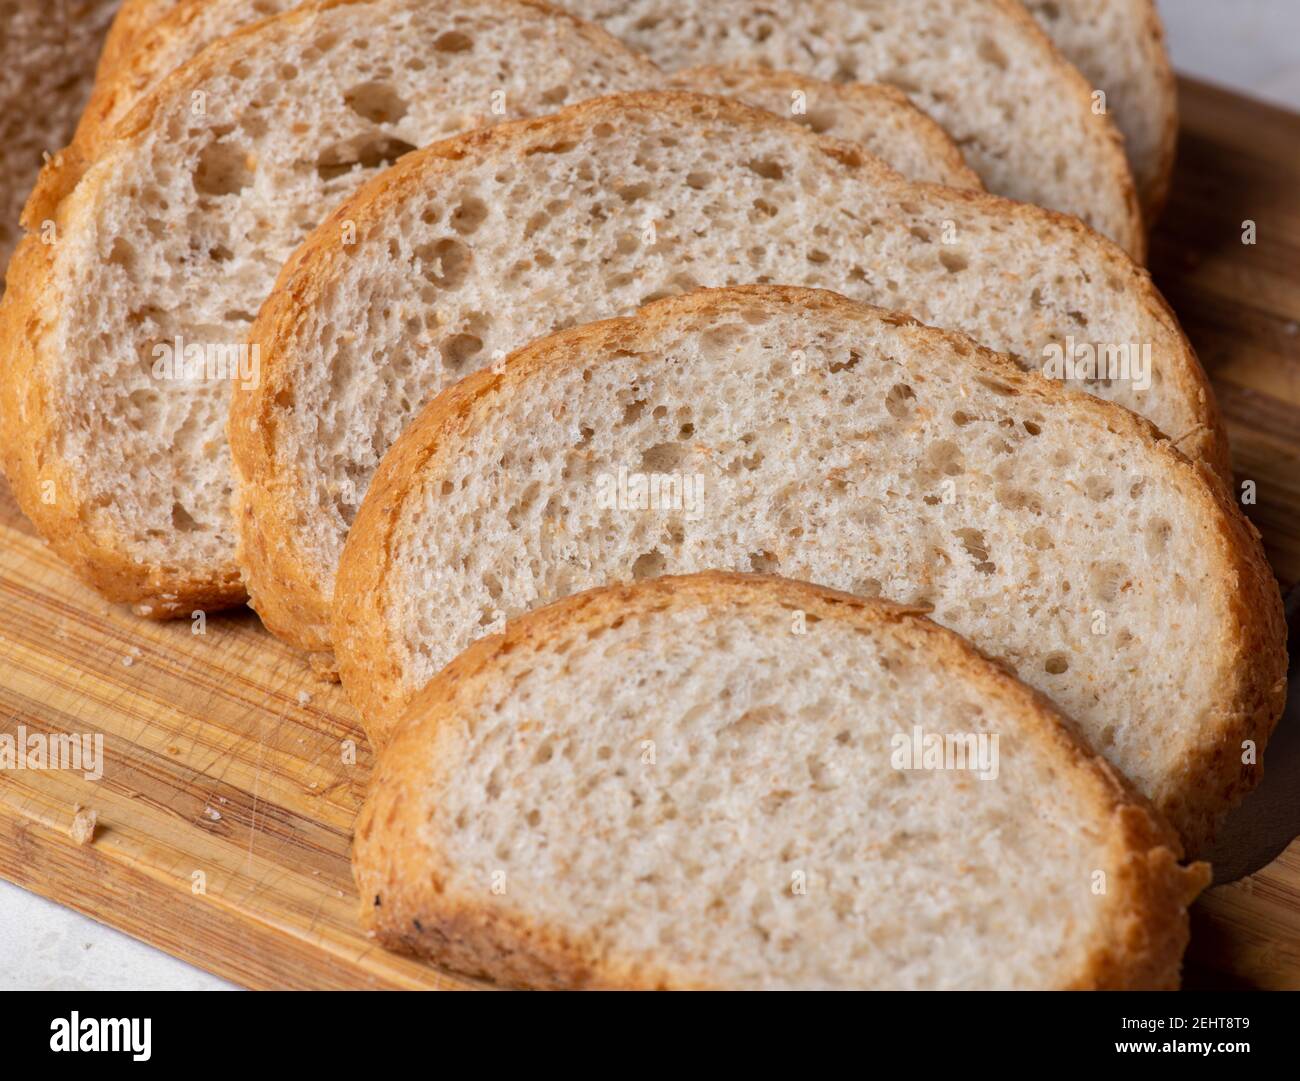 A sandwich cut in half High quality photo Stock Photo